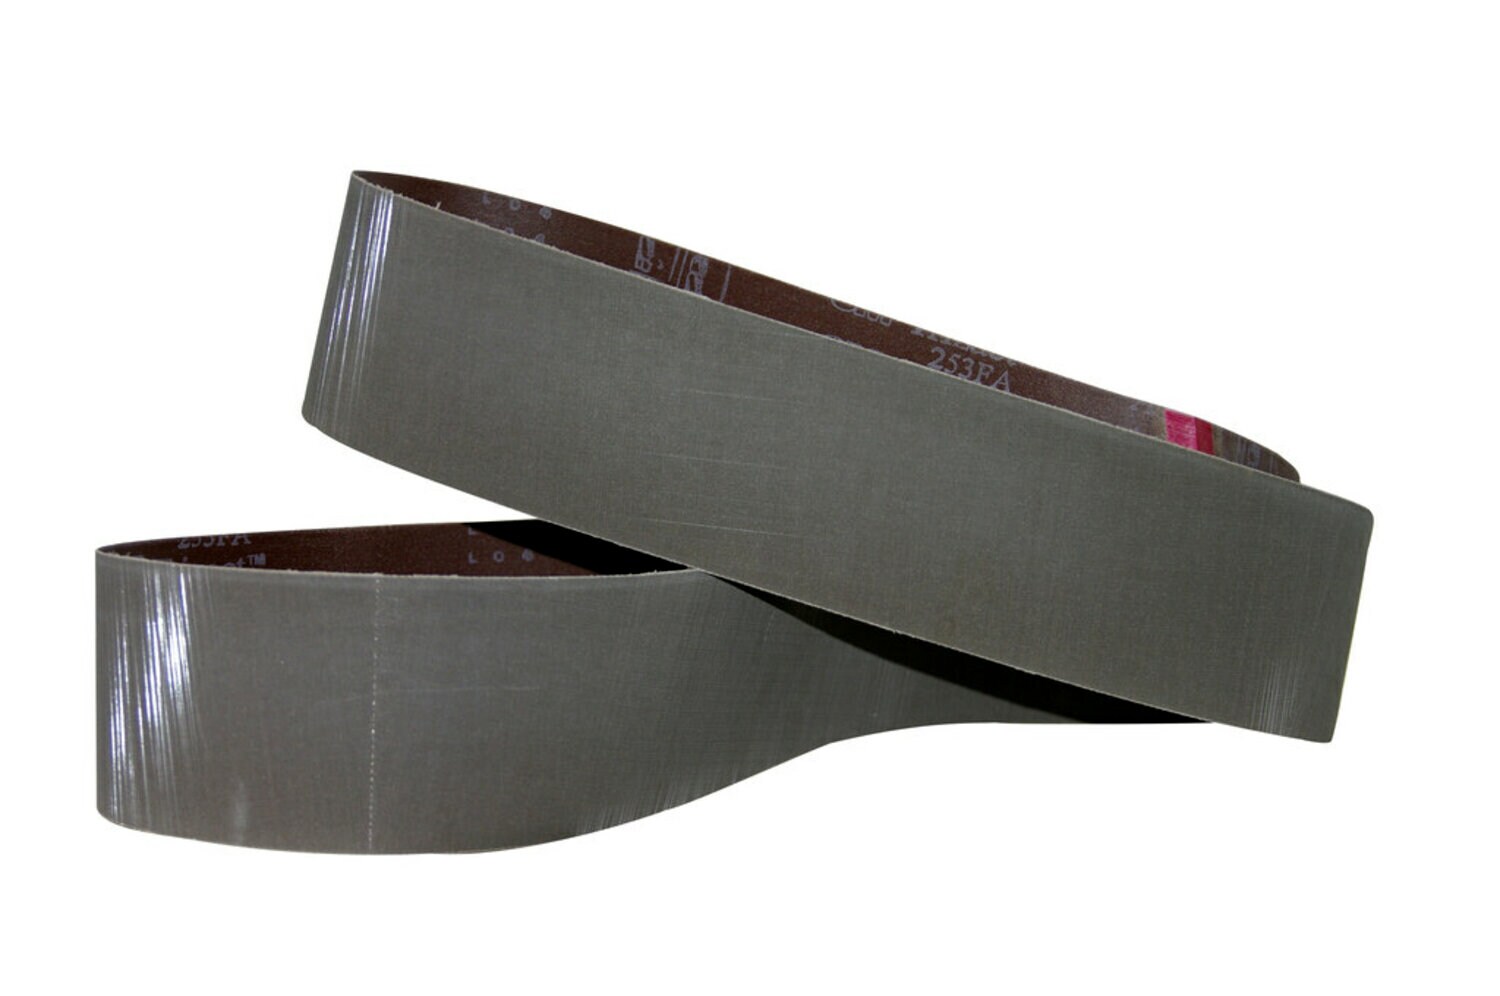 7010360148 - 3M Trizact Cloth Belt 253FA, A16 XF-weight, 25 in x 60 in, Film-lok,
Full-flex, 2 ea/Case